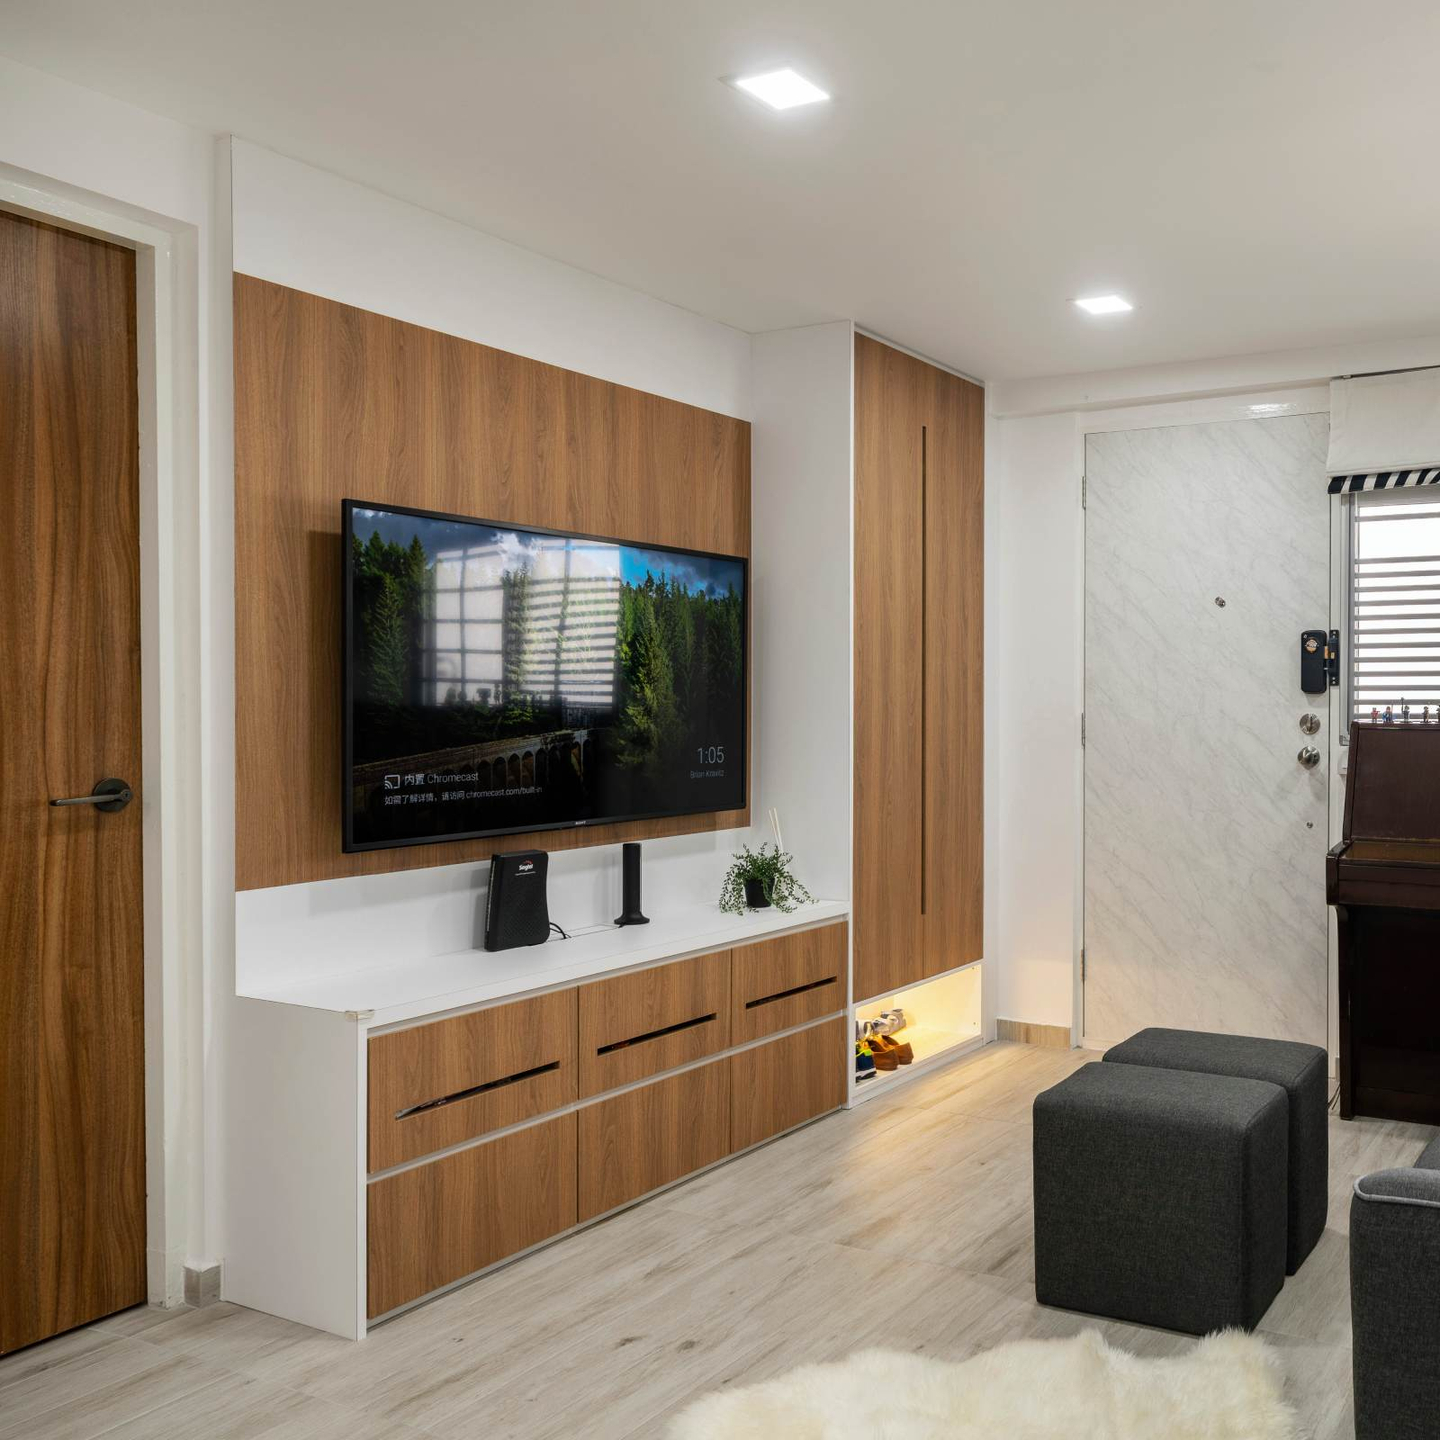 Wooden Laminate Design For Living Rooms - Livspace